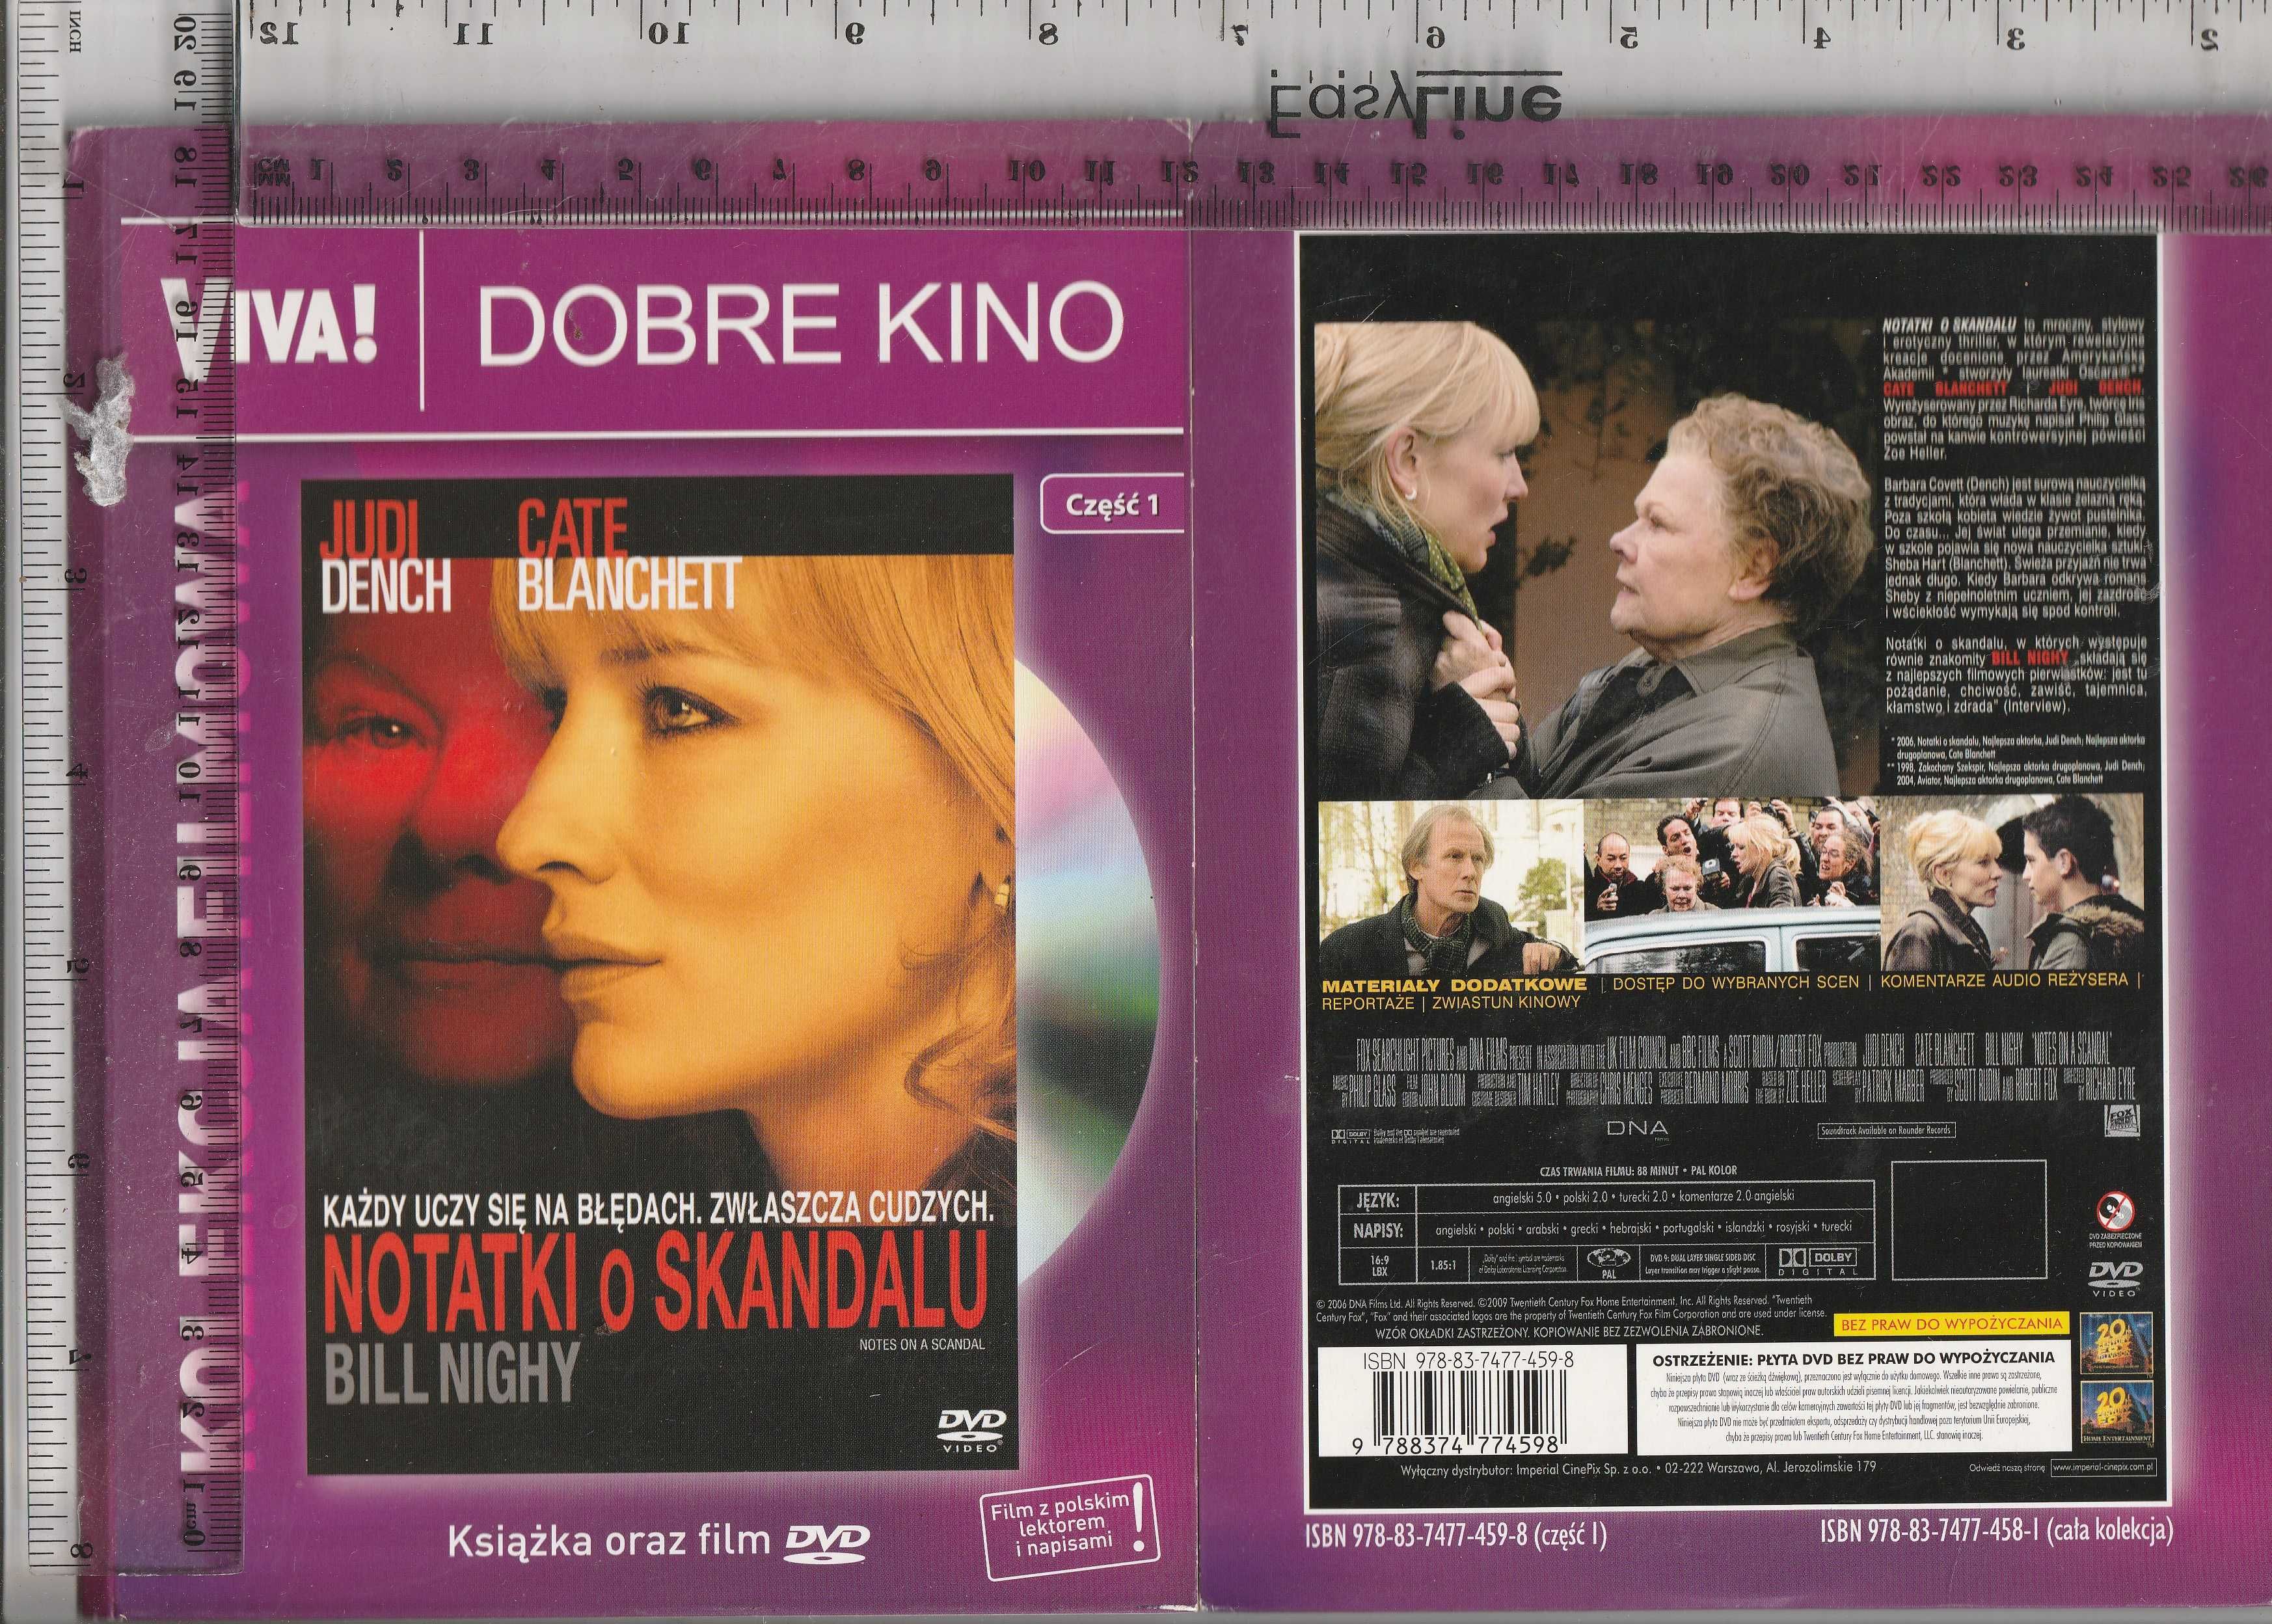 Notatki o skandalu część 1 Kate Blanchett DVD